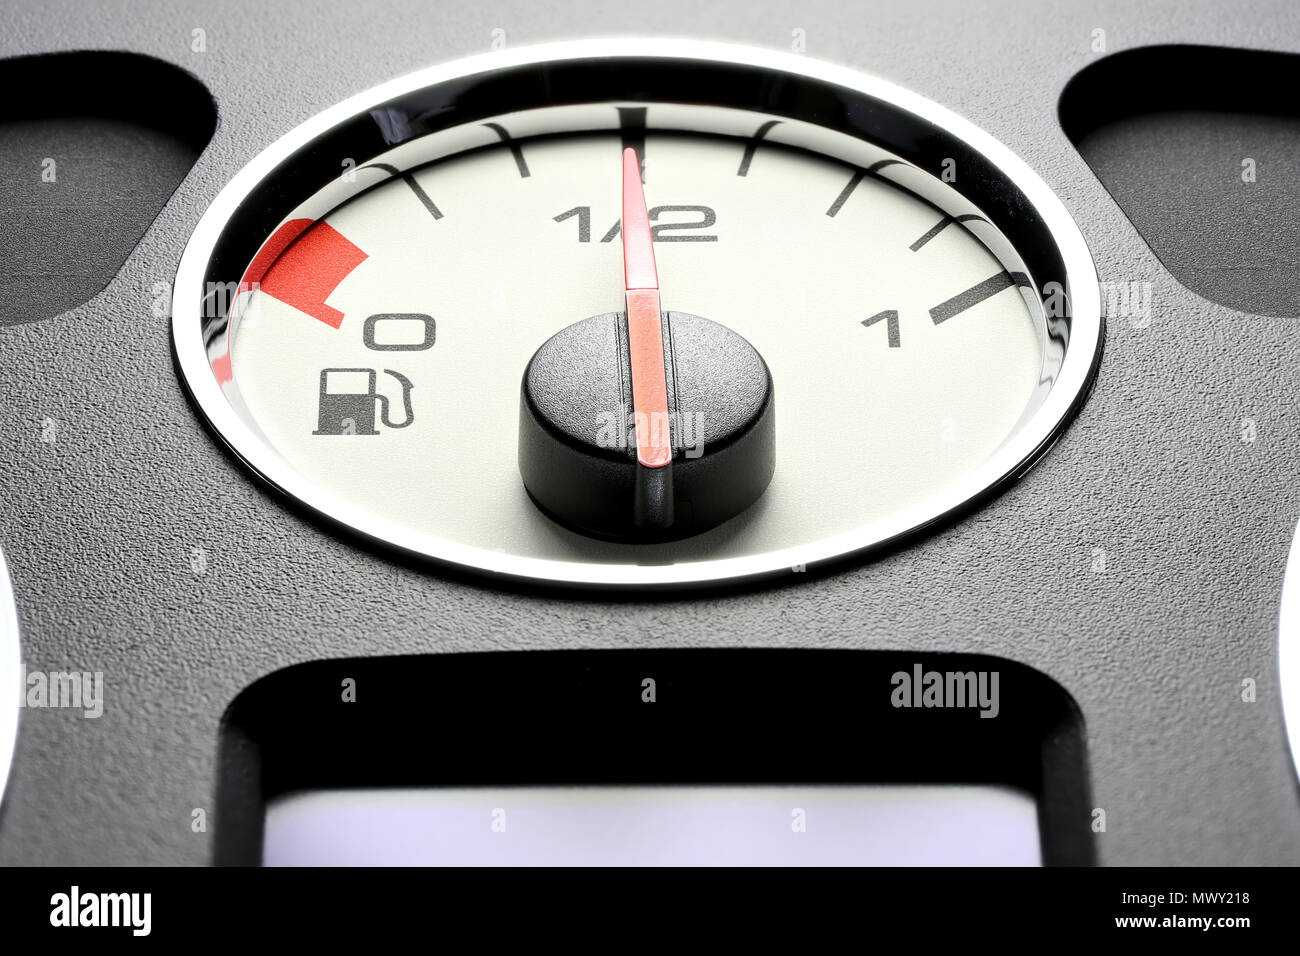 fuel gauge in car dashboard - half full Stock Photo